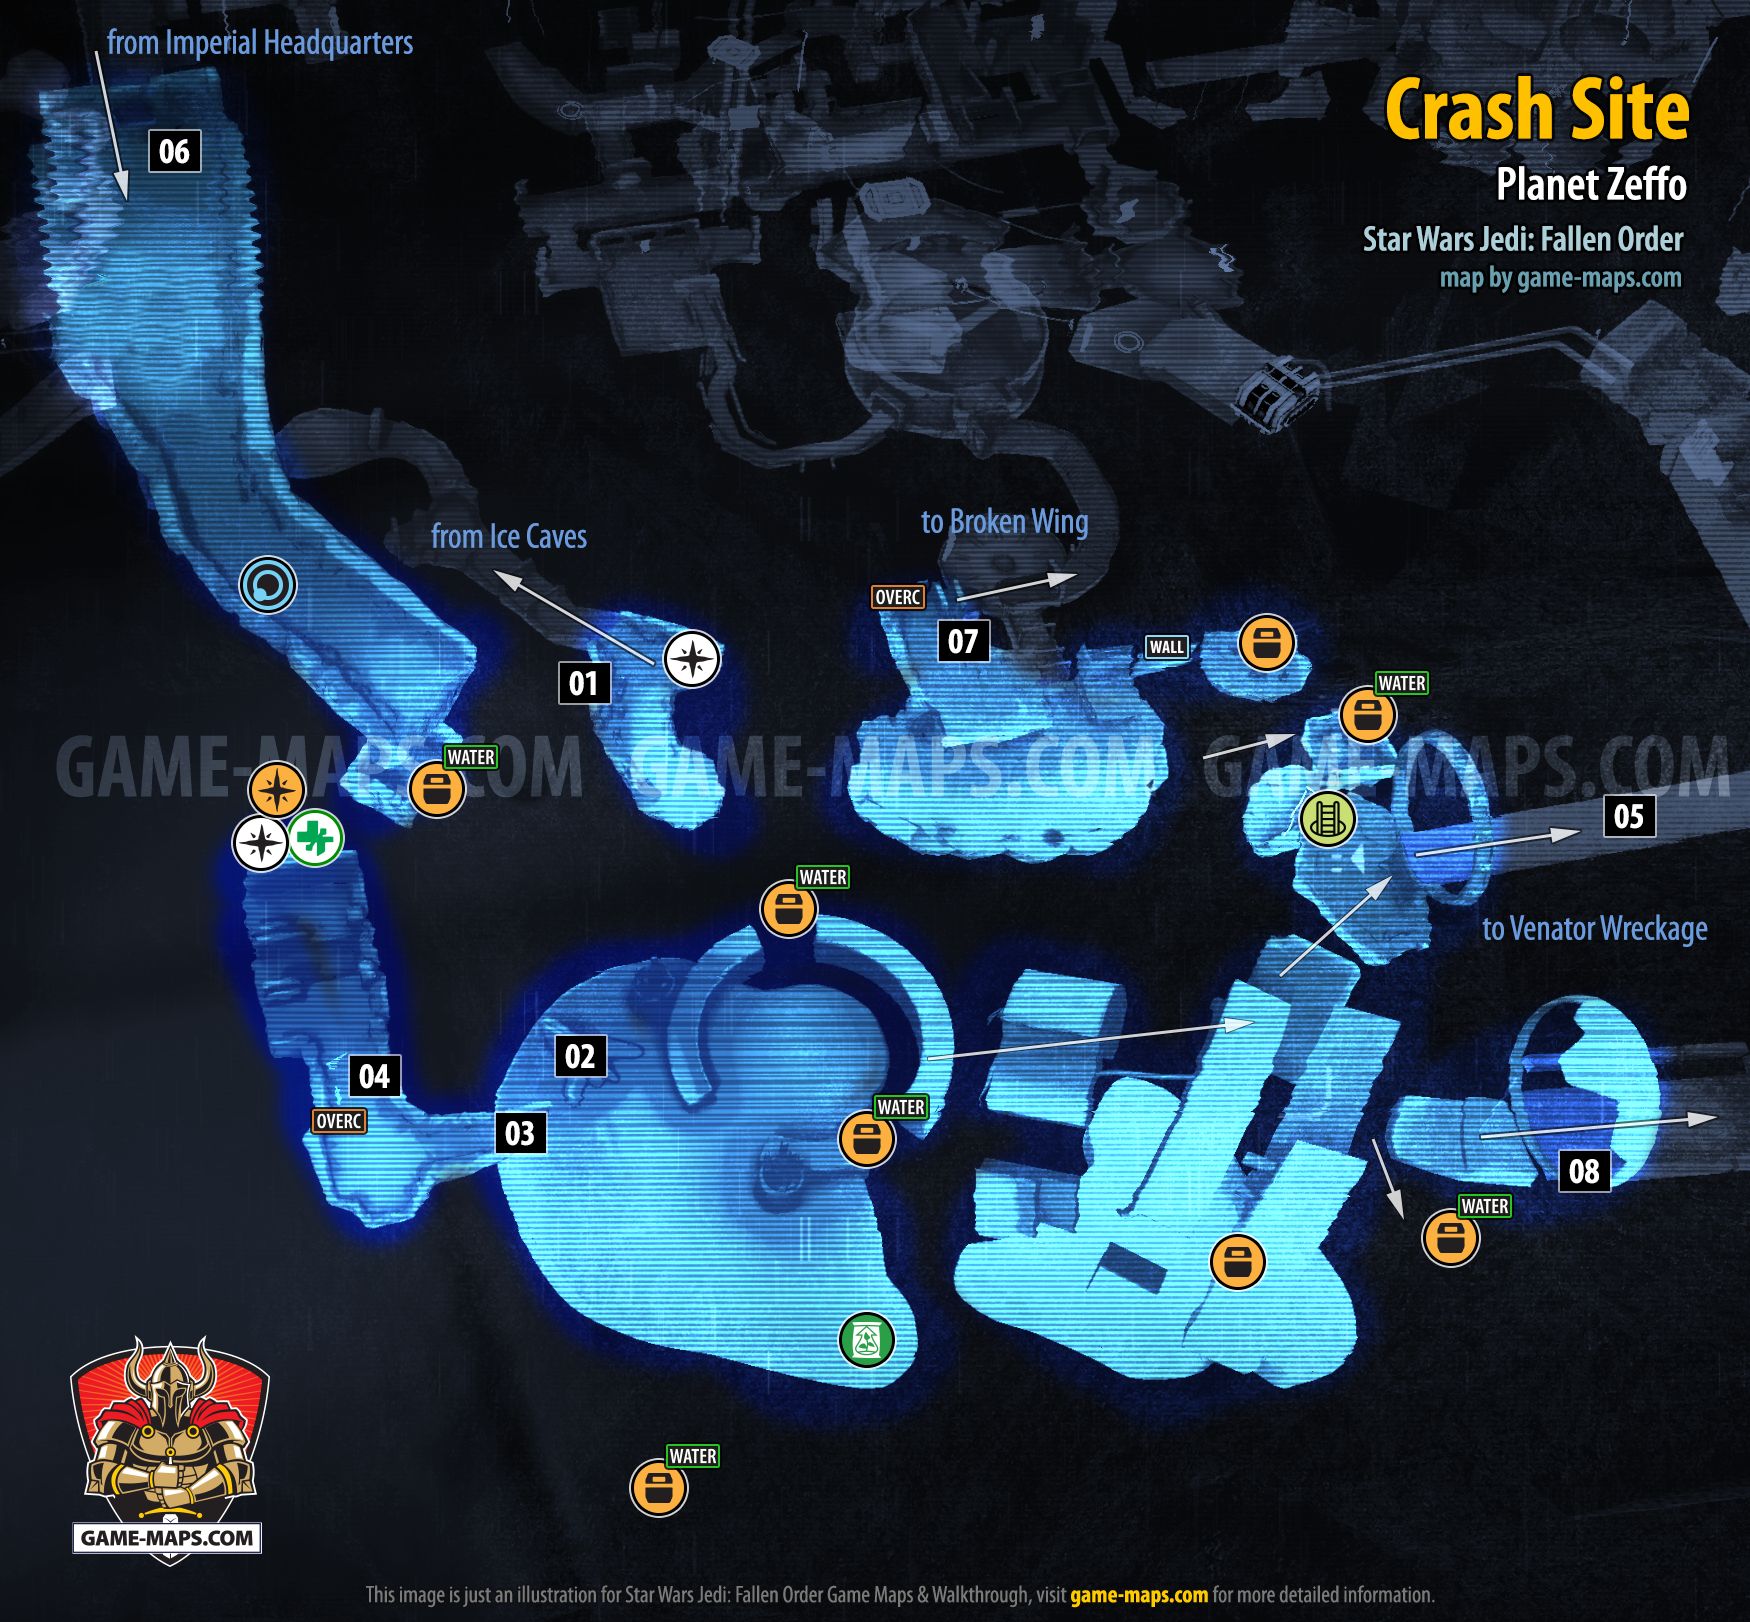 Crash Site Map, Planet Zeffo for Star Wars Jedi Fallen Order